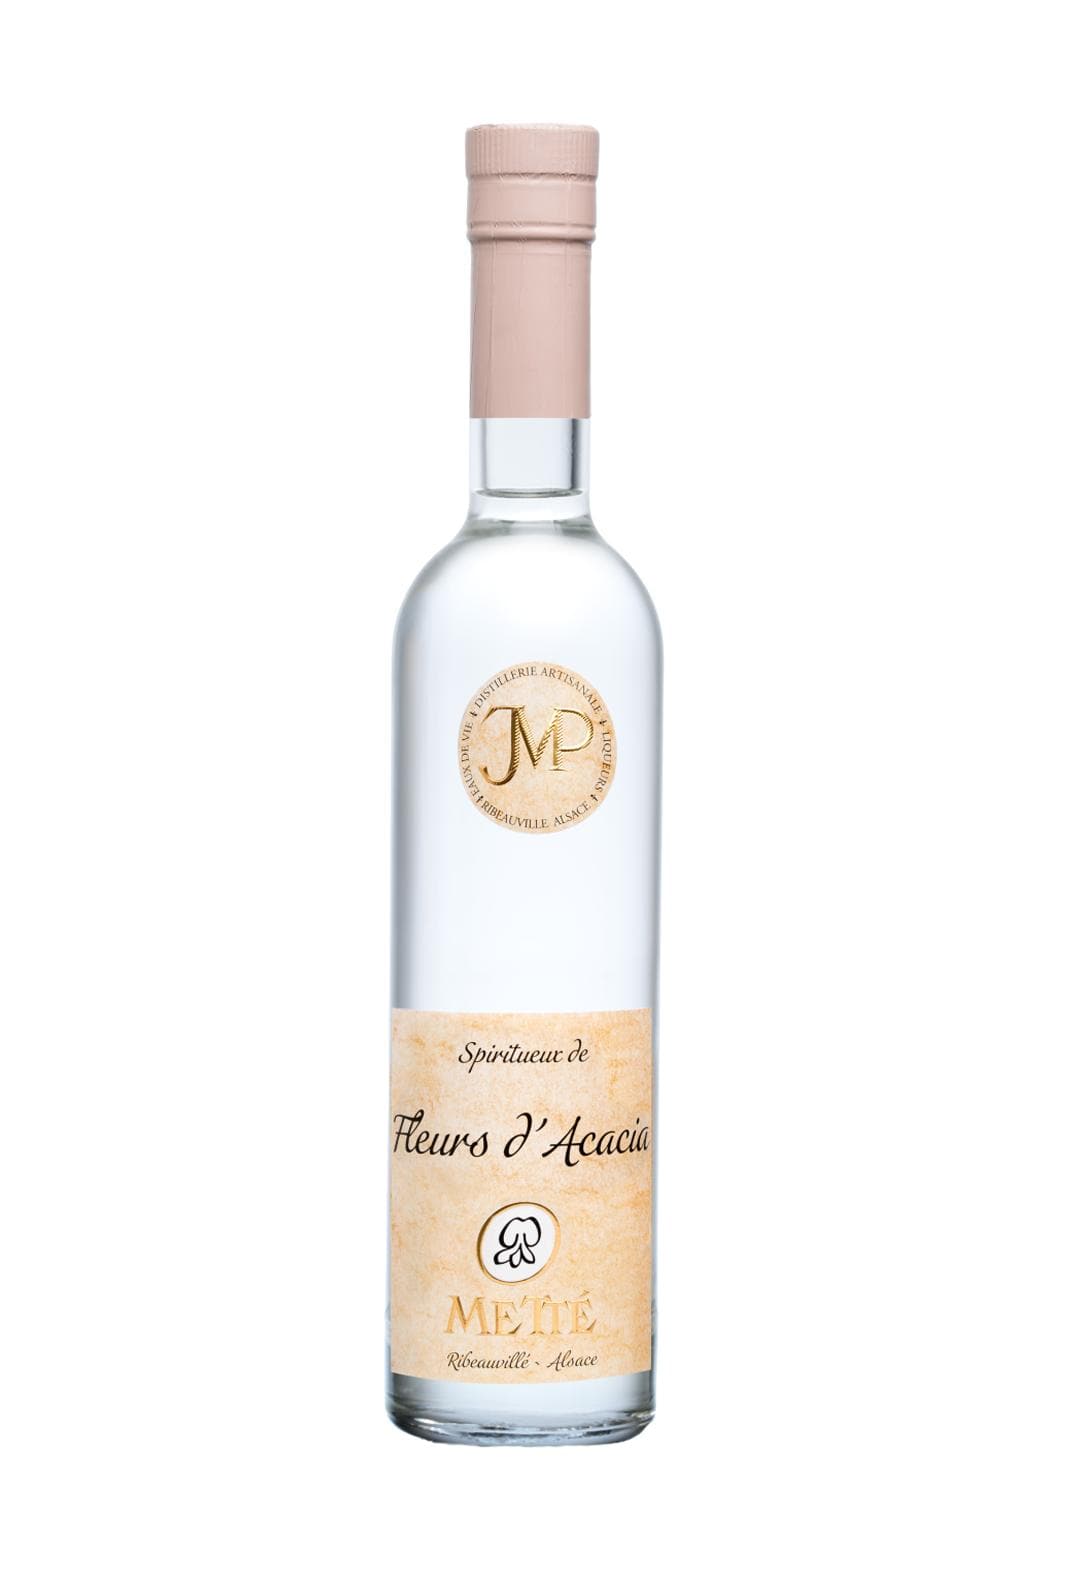 Mette Eau de Vie de Fleurs d'Acacia (Acacia Flower spirit) 45% 350ml | Liquor & Spirits | Shop online at Spirits of France